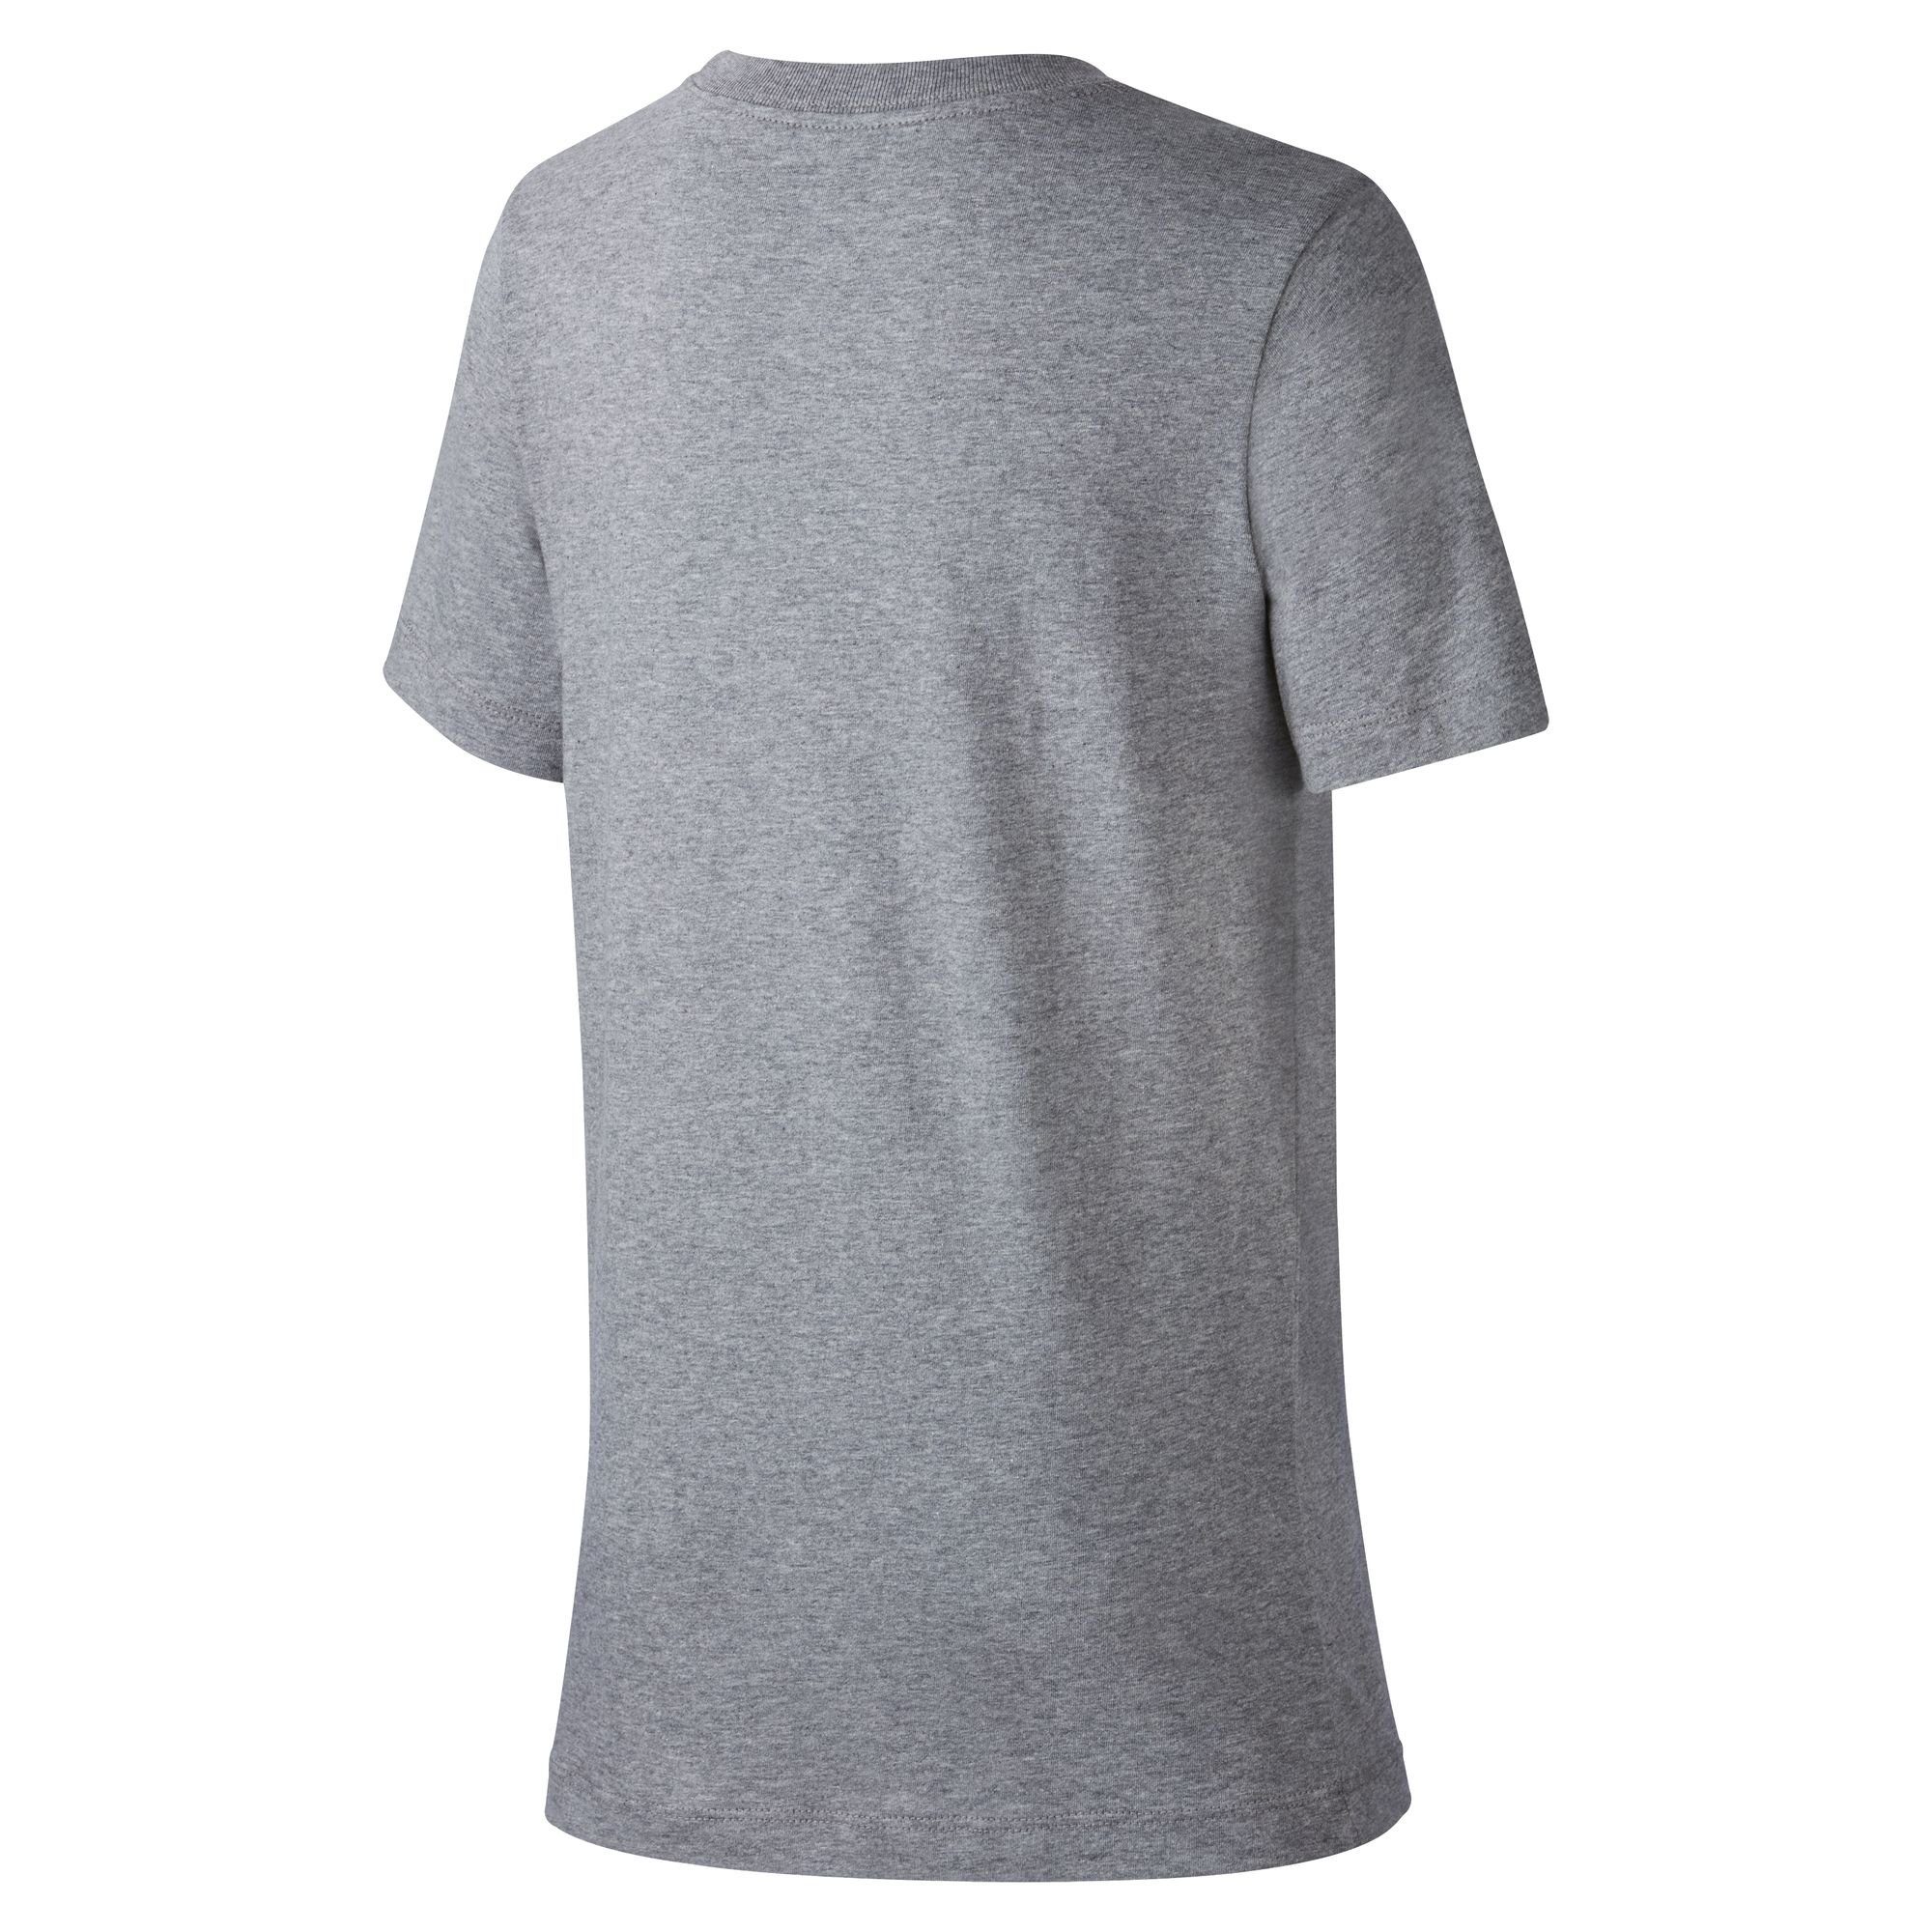 BIG KIDS' Sportswear T-Shirt Nike T-SHIRT COTTON grau-meliert